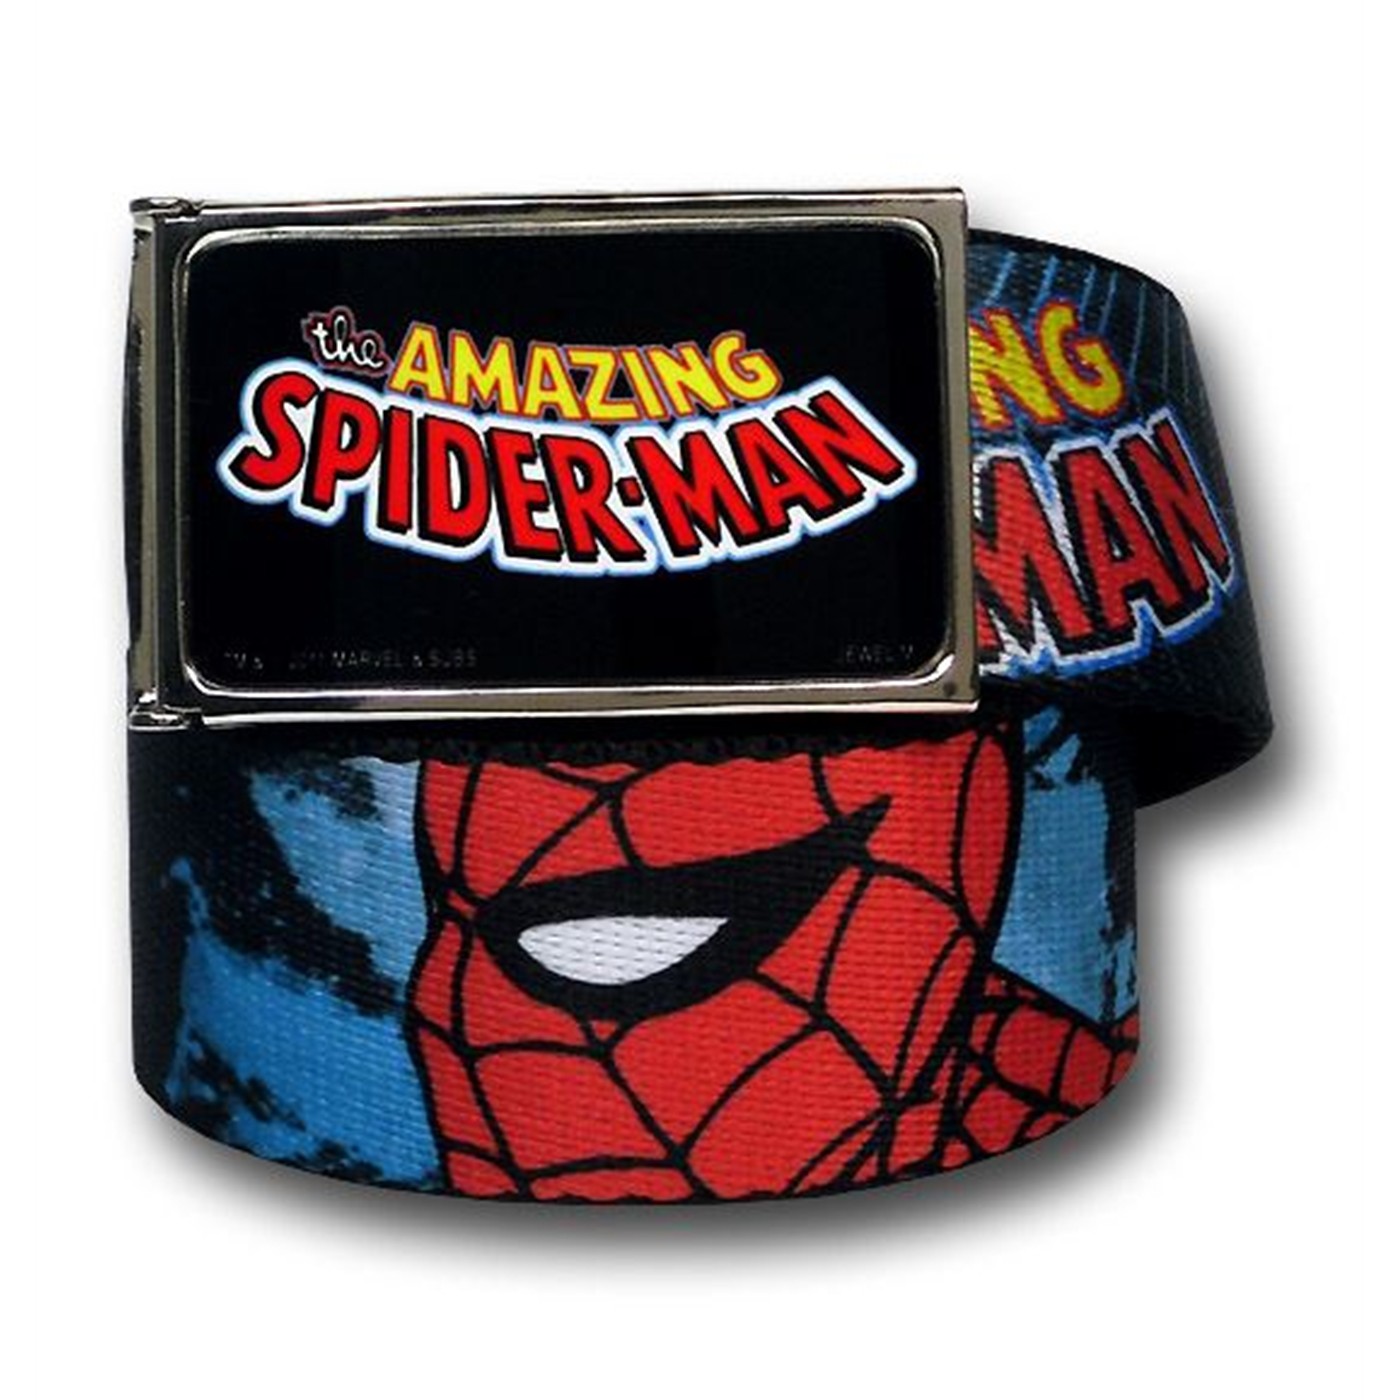 The Amazing Spiderman Black Web Belt